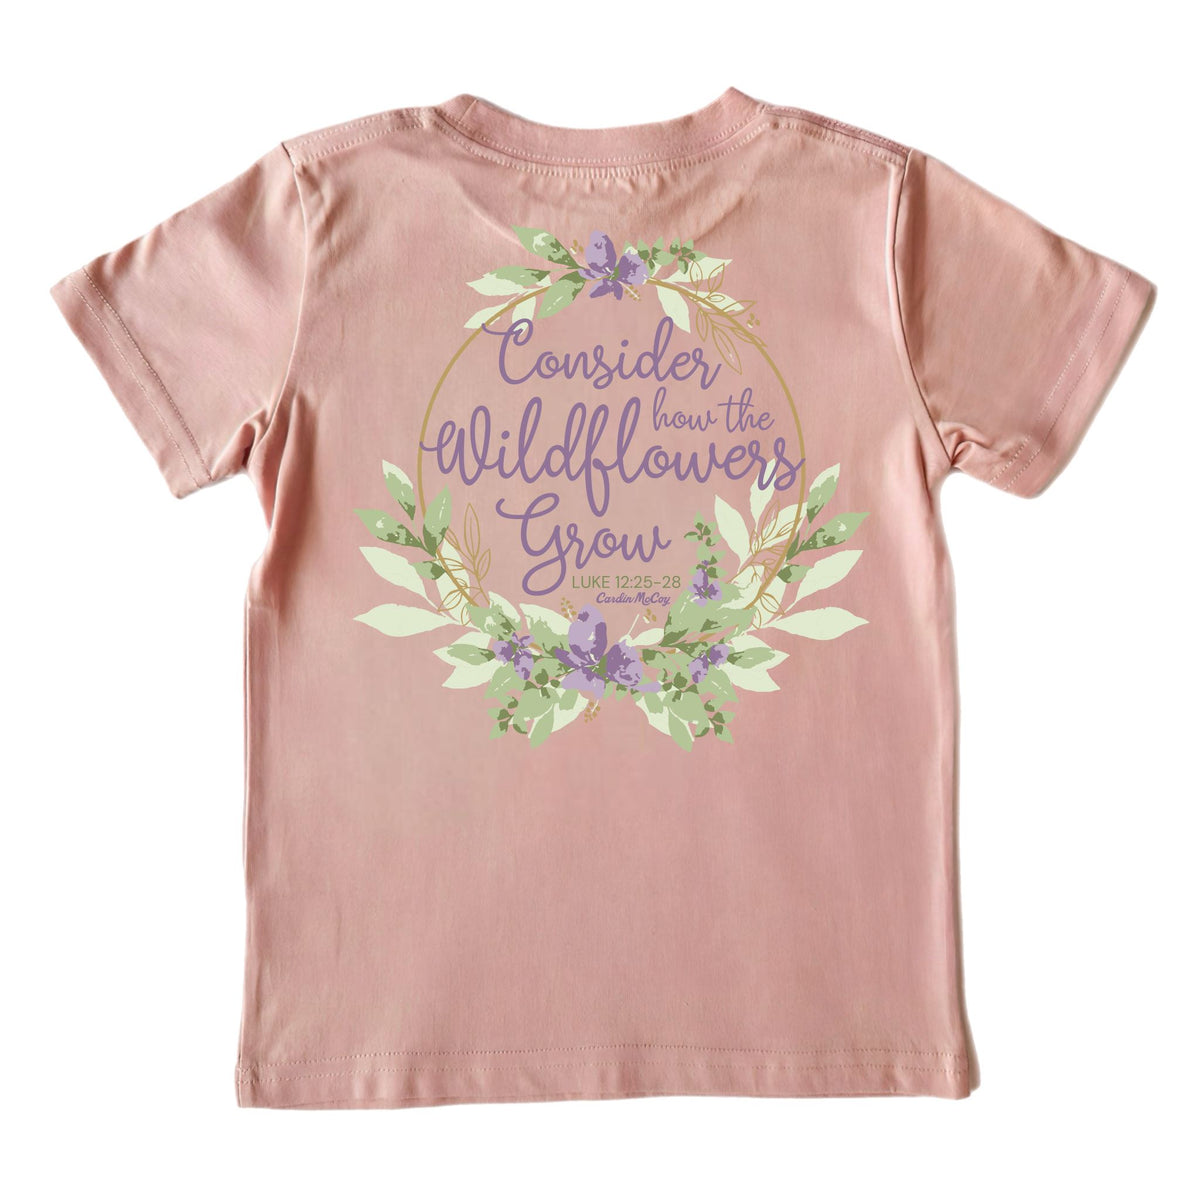 Girls' Wildflowers Short-Sleeve Tee Short Sleeve T-Shirt Cardin McCoy Rose Tan XXS (2/3) Pocket